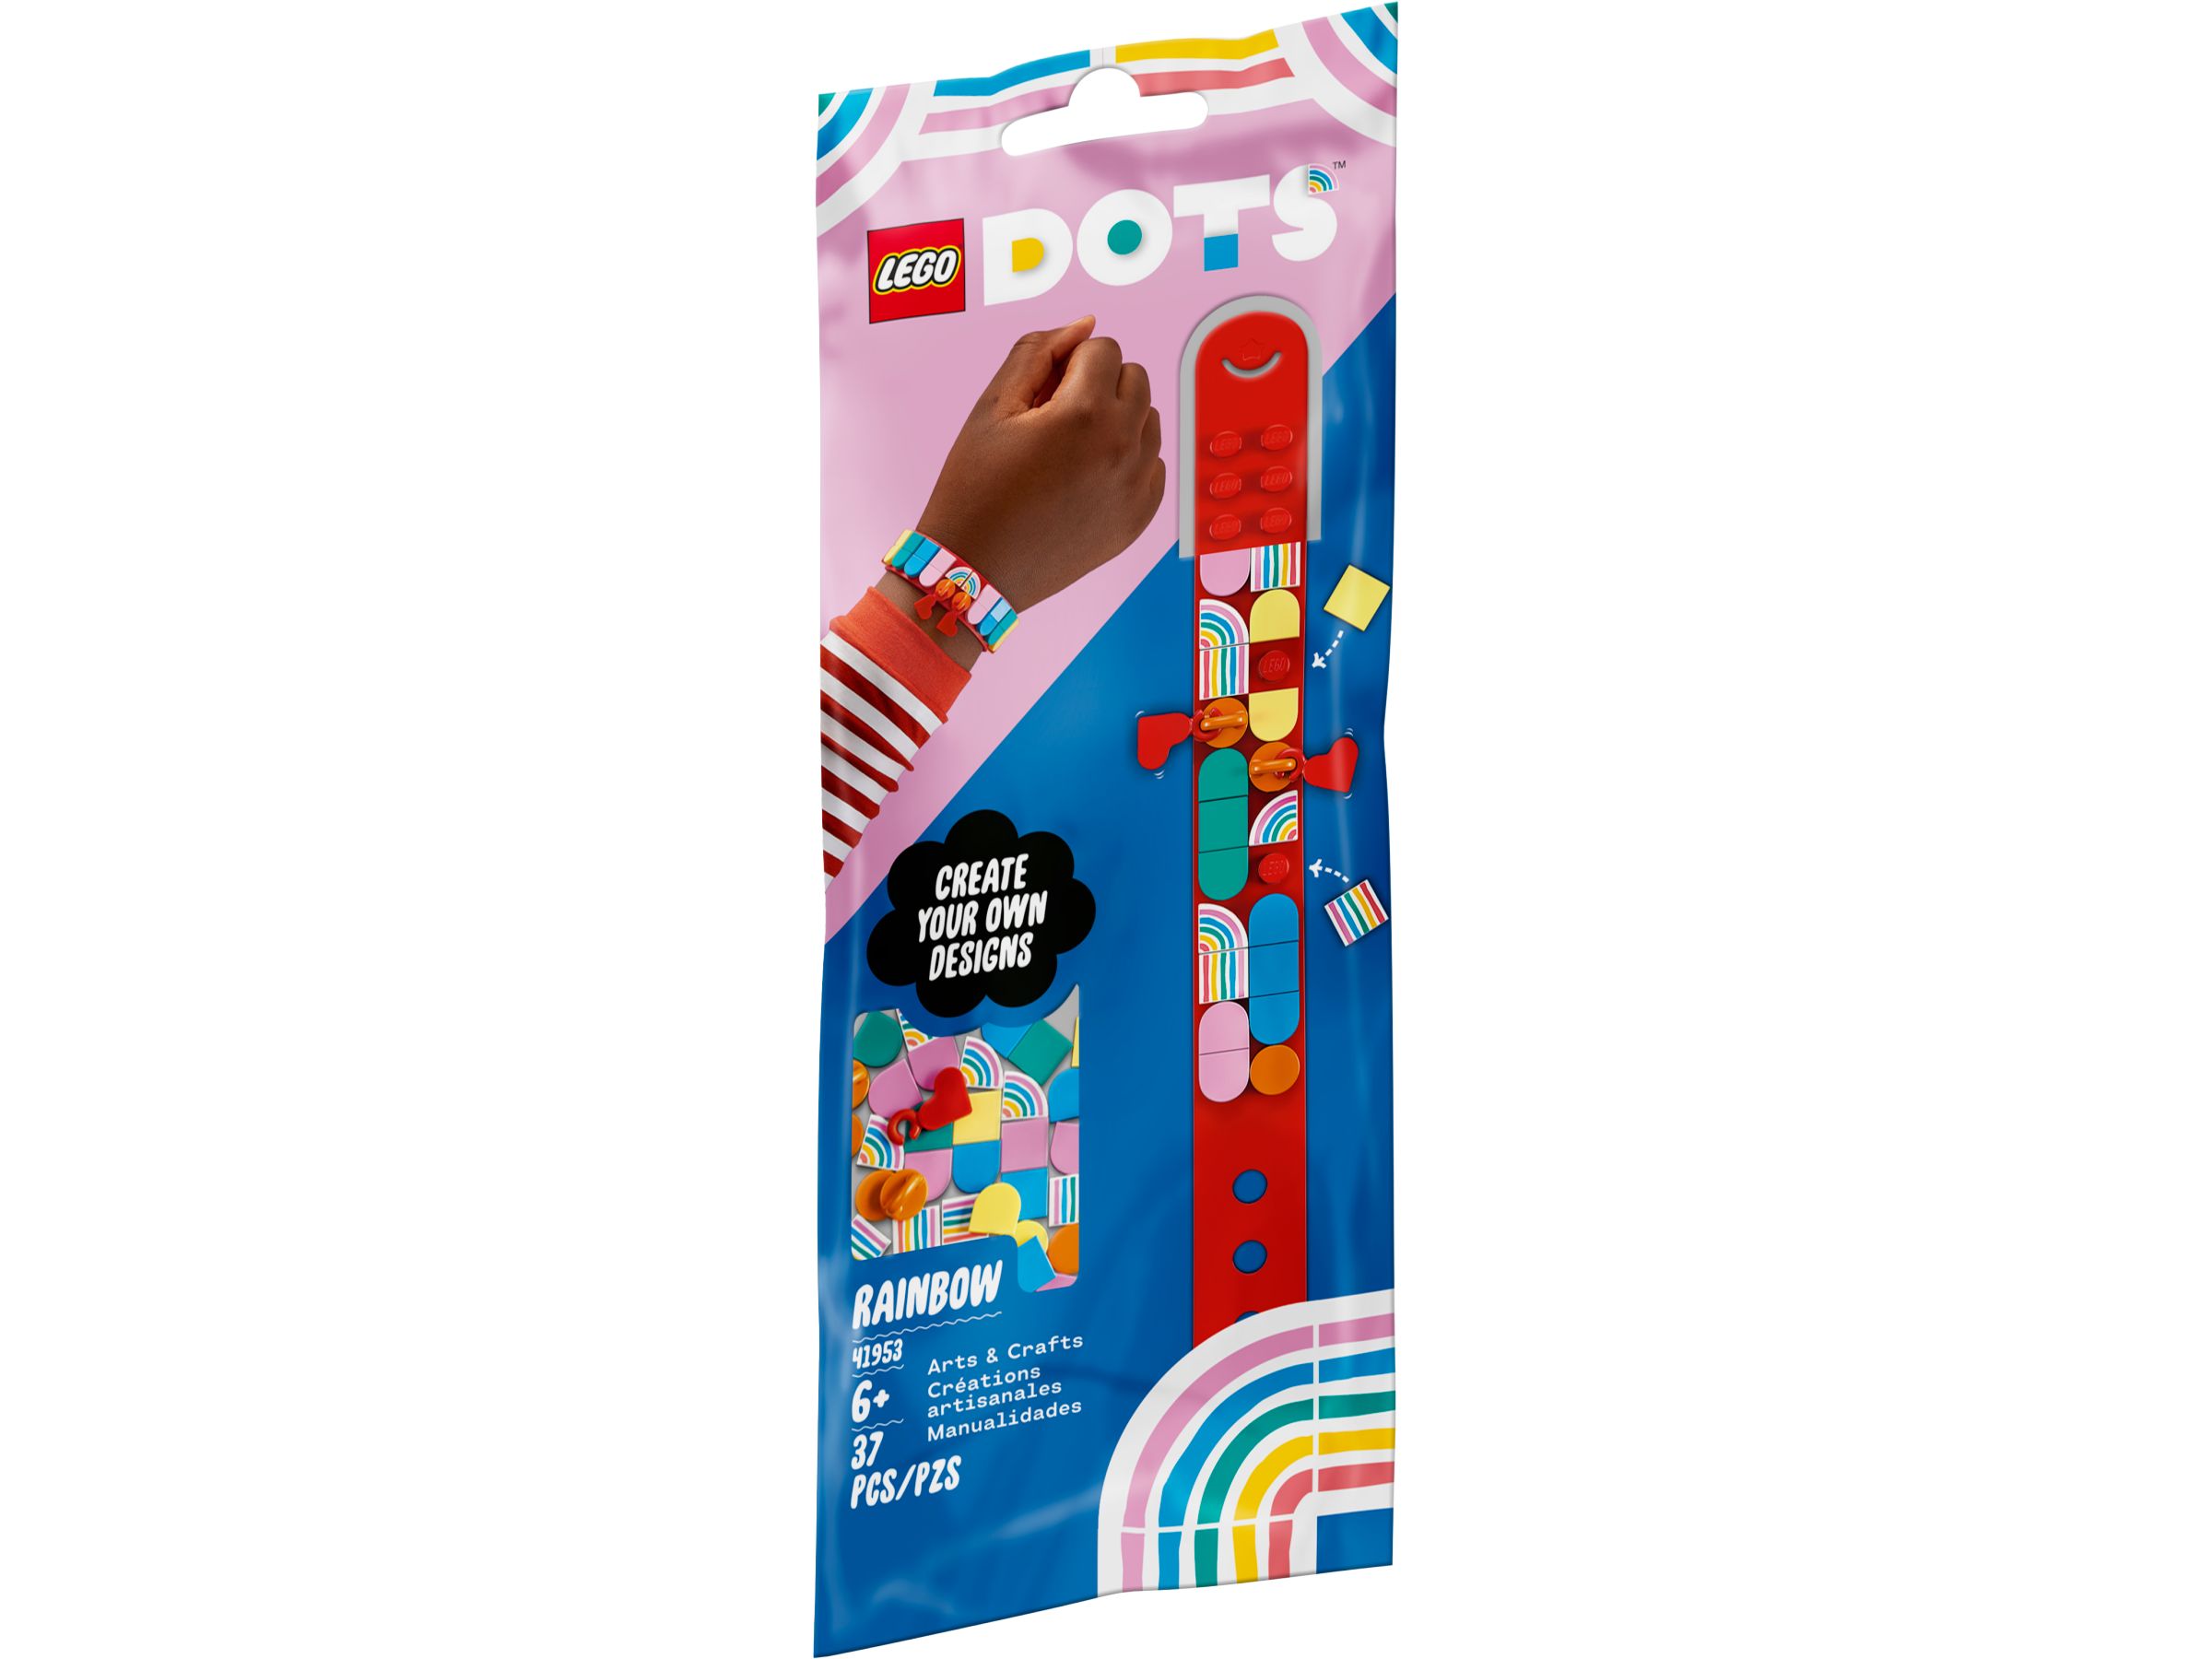 LEGO Dots 41953 Regenbogen Armband mit Anhängern LEGO_41953_alt1.jpg